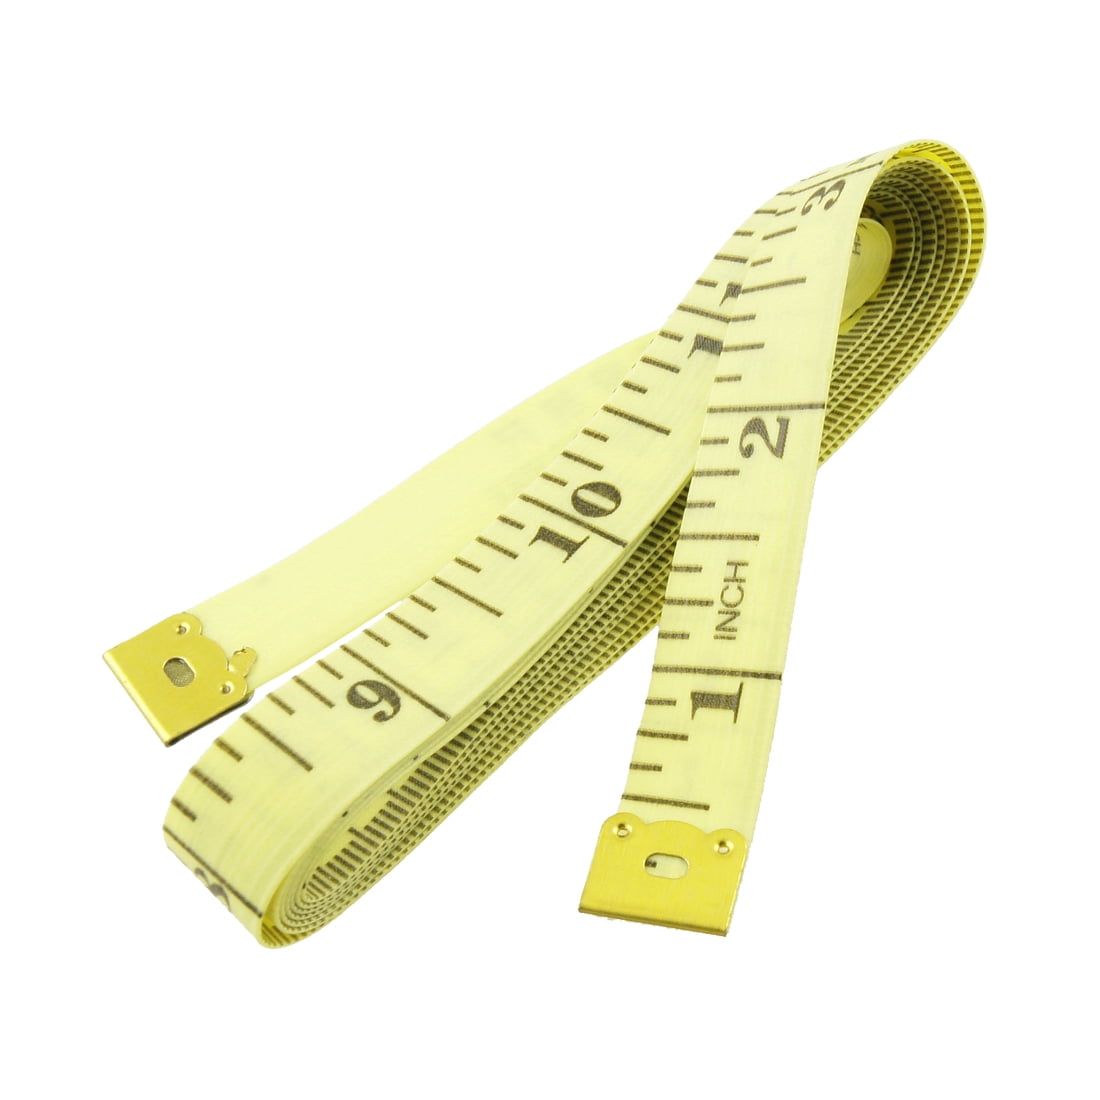 2 x Silverline Measuring Tape 1.5m/60" Long/Flat Flexible Measure Ruler Precise 